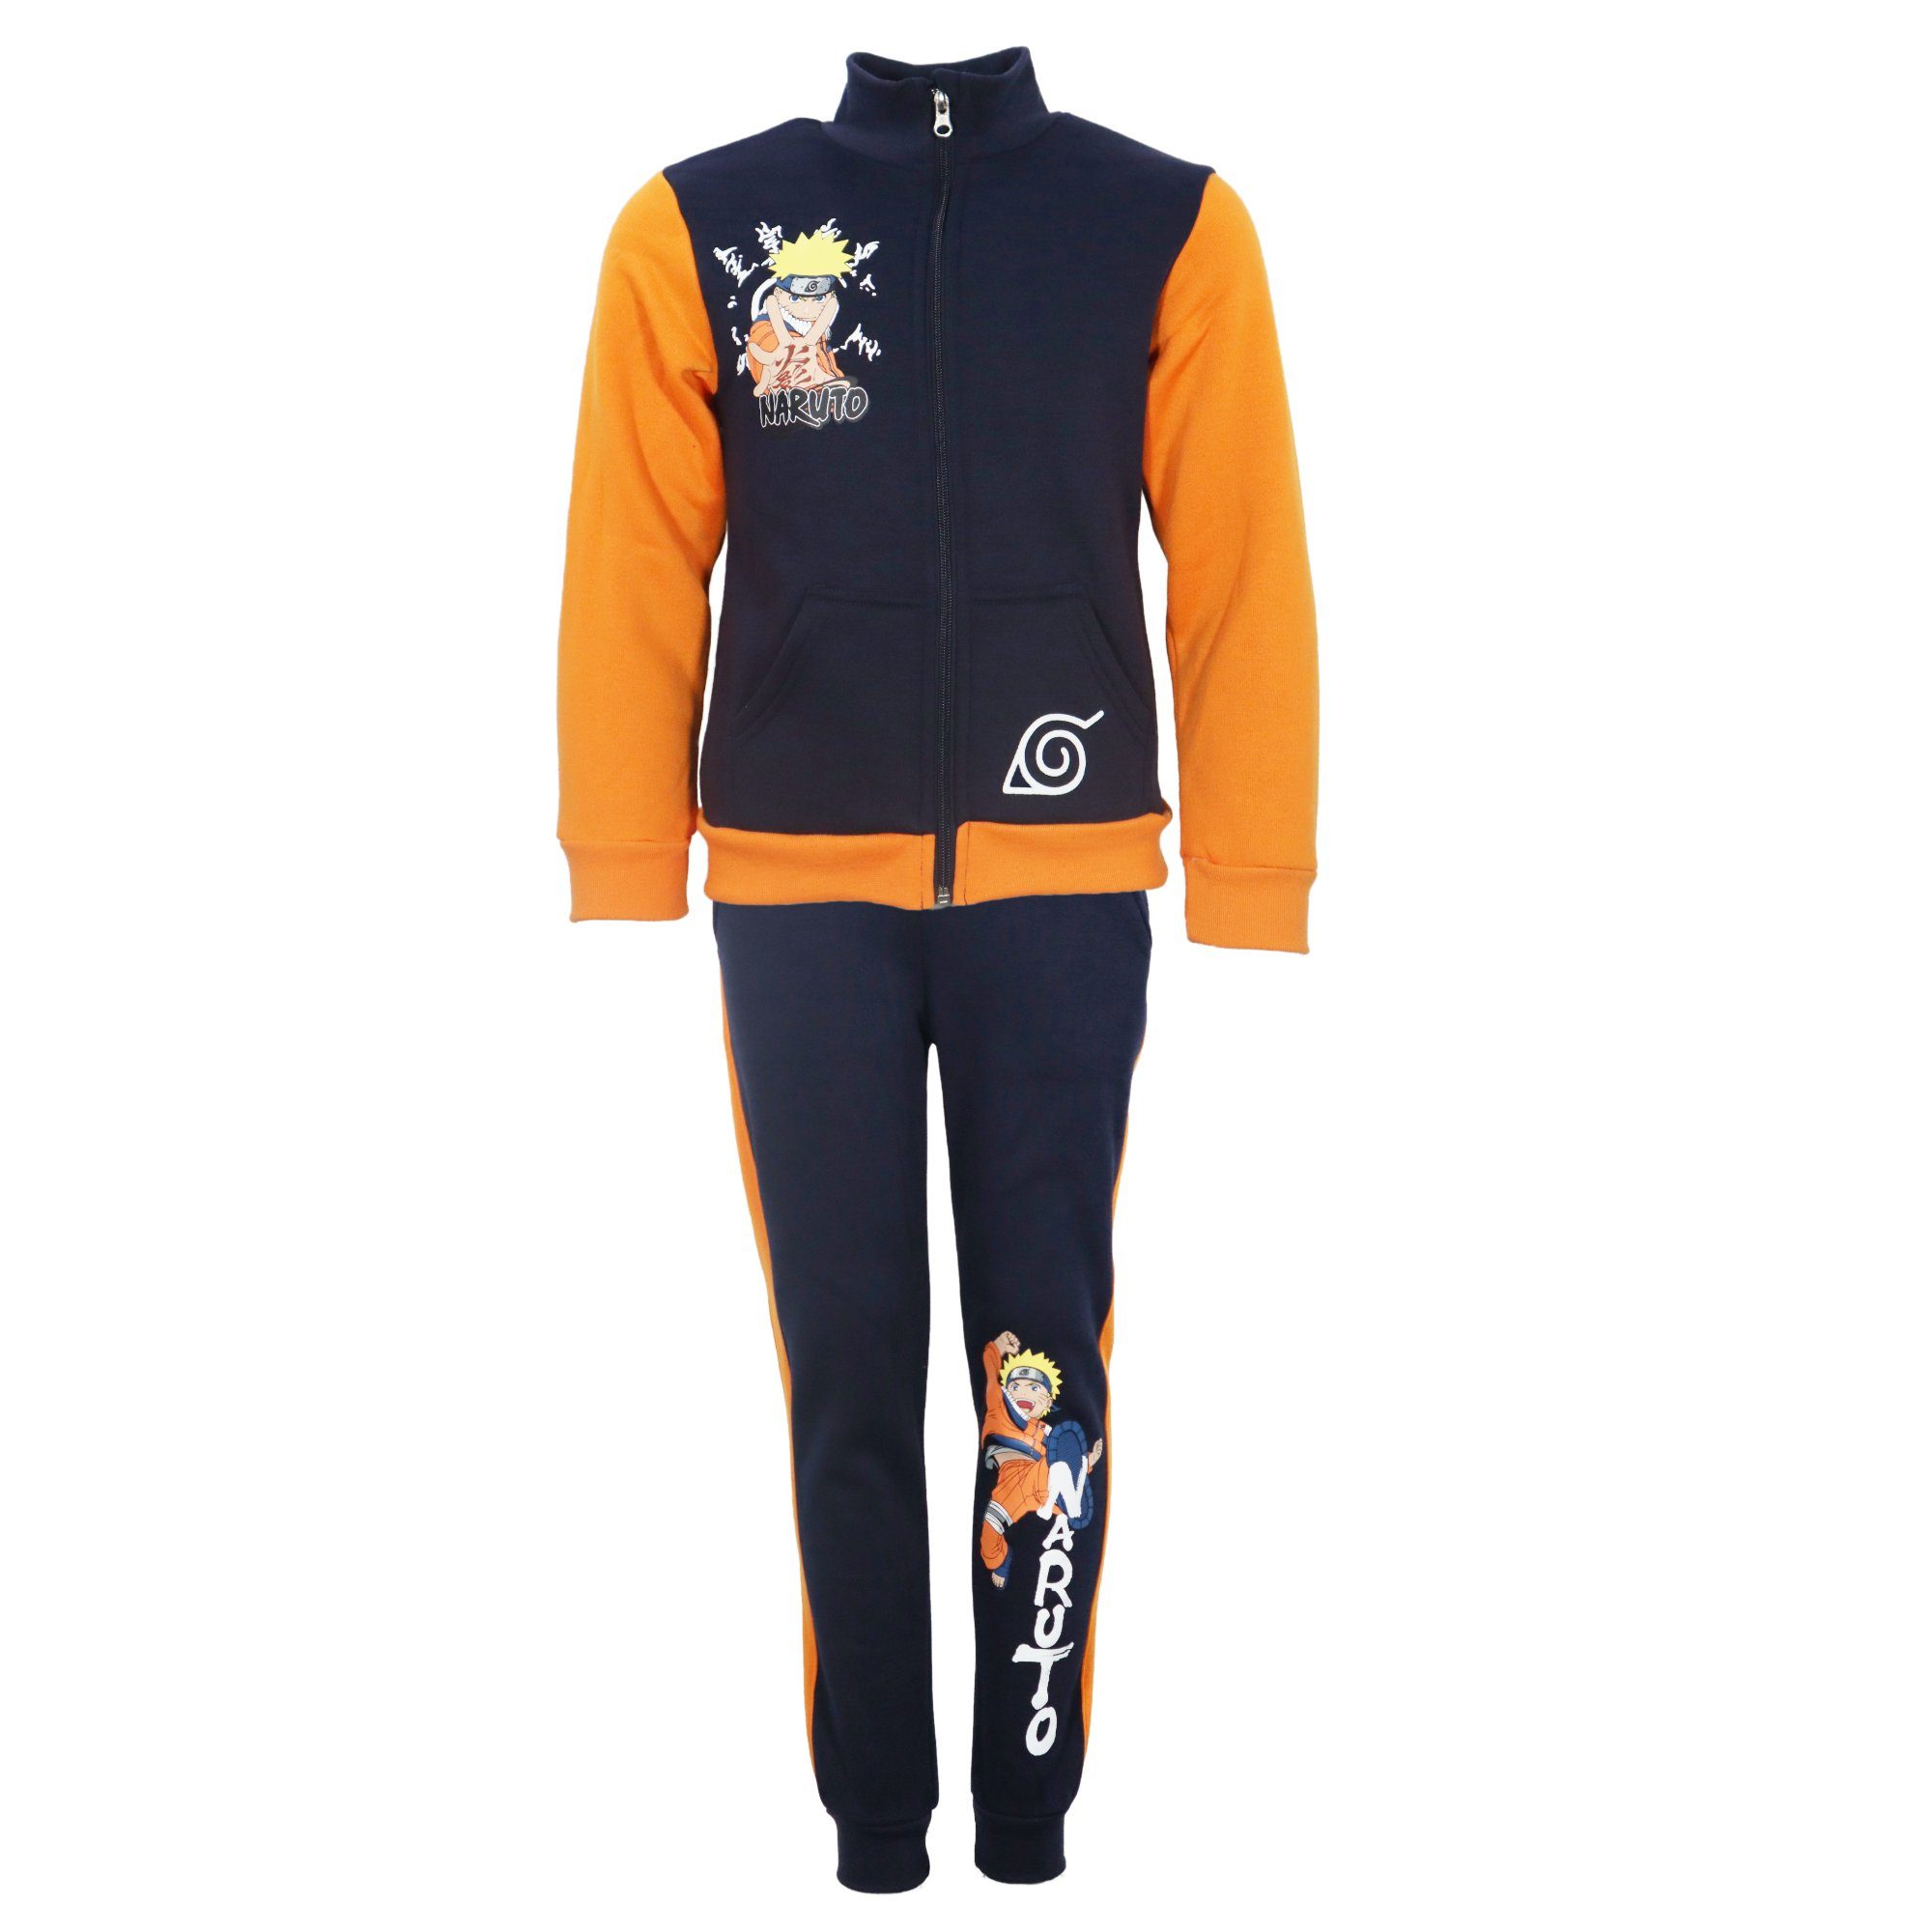 Naruto Jogginganzug Sporthose Sweater Naruto bis Blau Gr. Shippuden Jacke, 140 98 Hose Joggingset